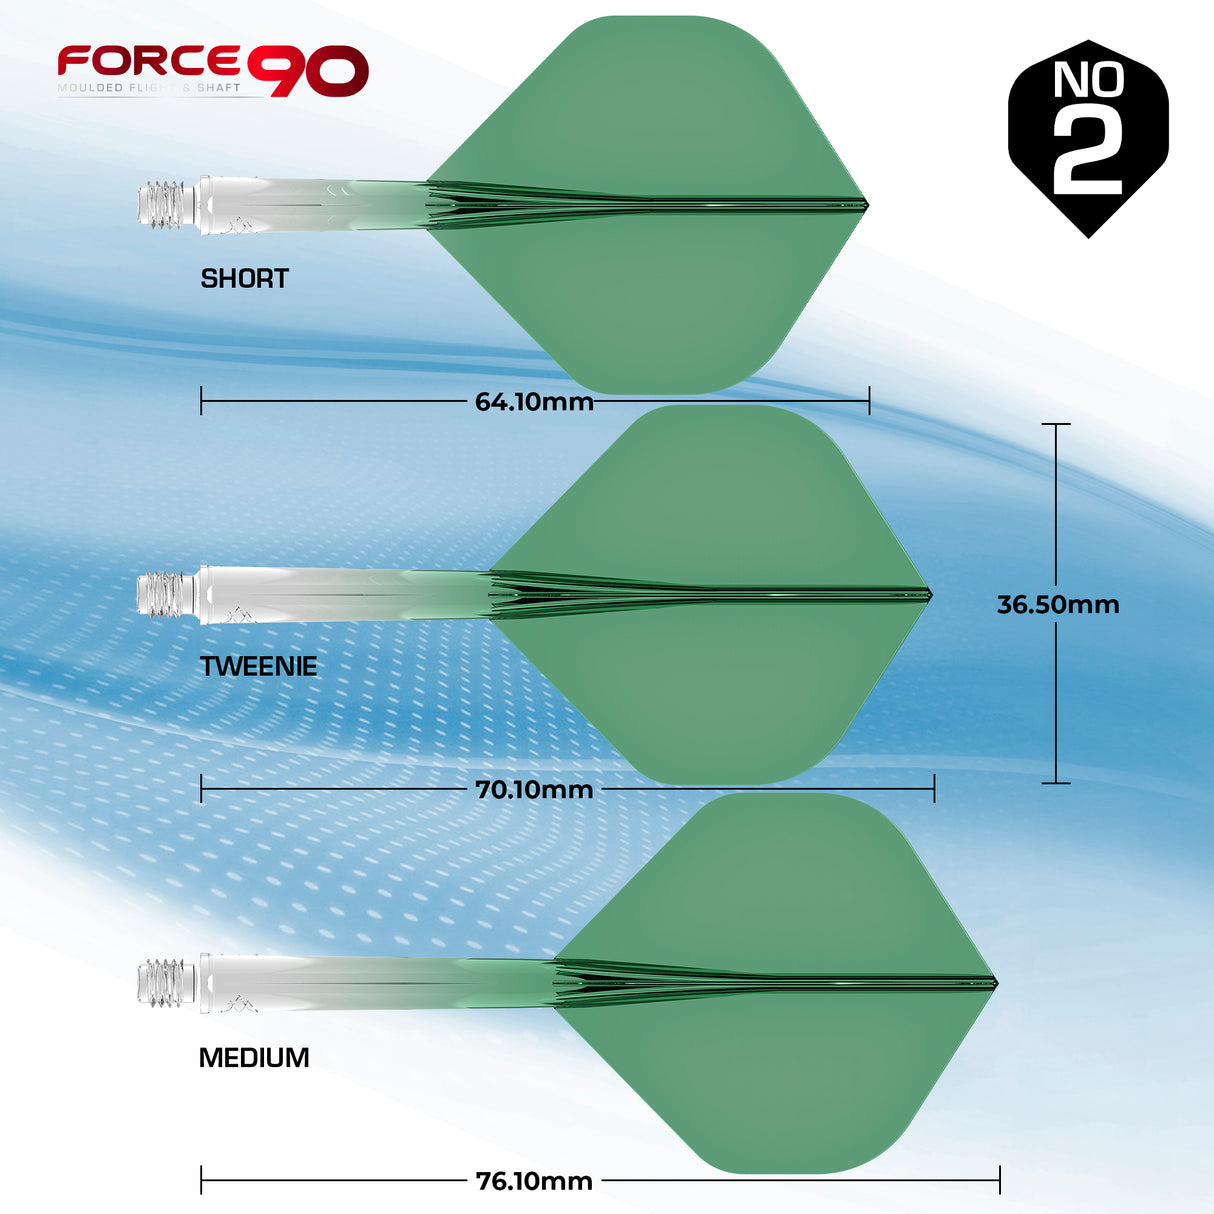 Mission Force 90 - New Moulded Flight & Shaft System - Standard No2 - Gradient - Transparent Green